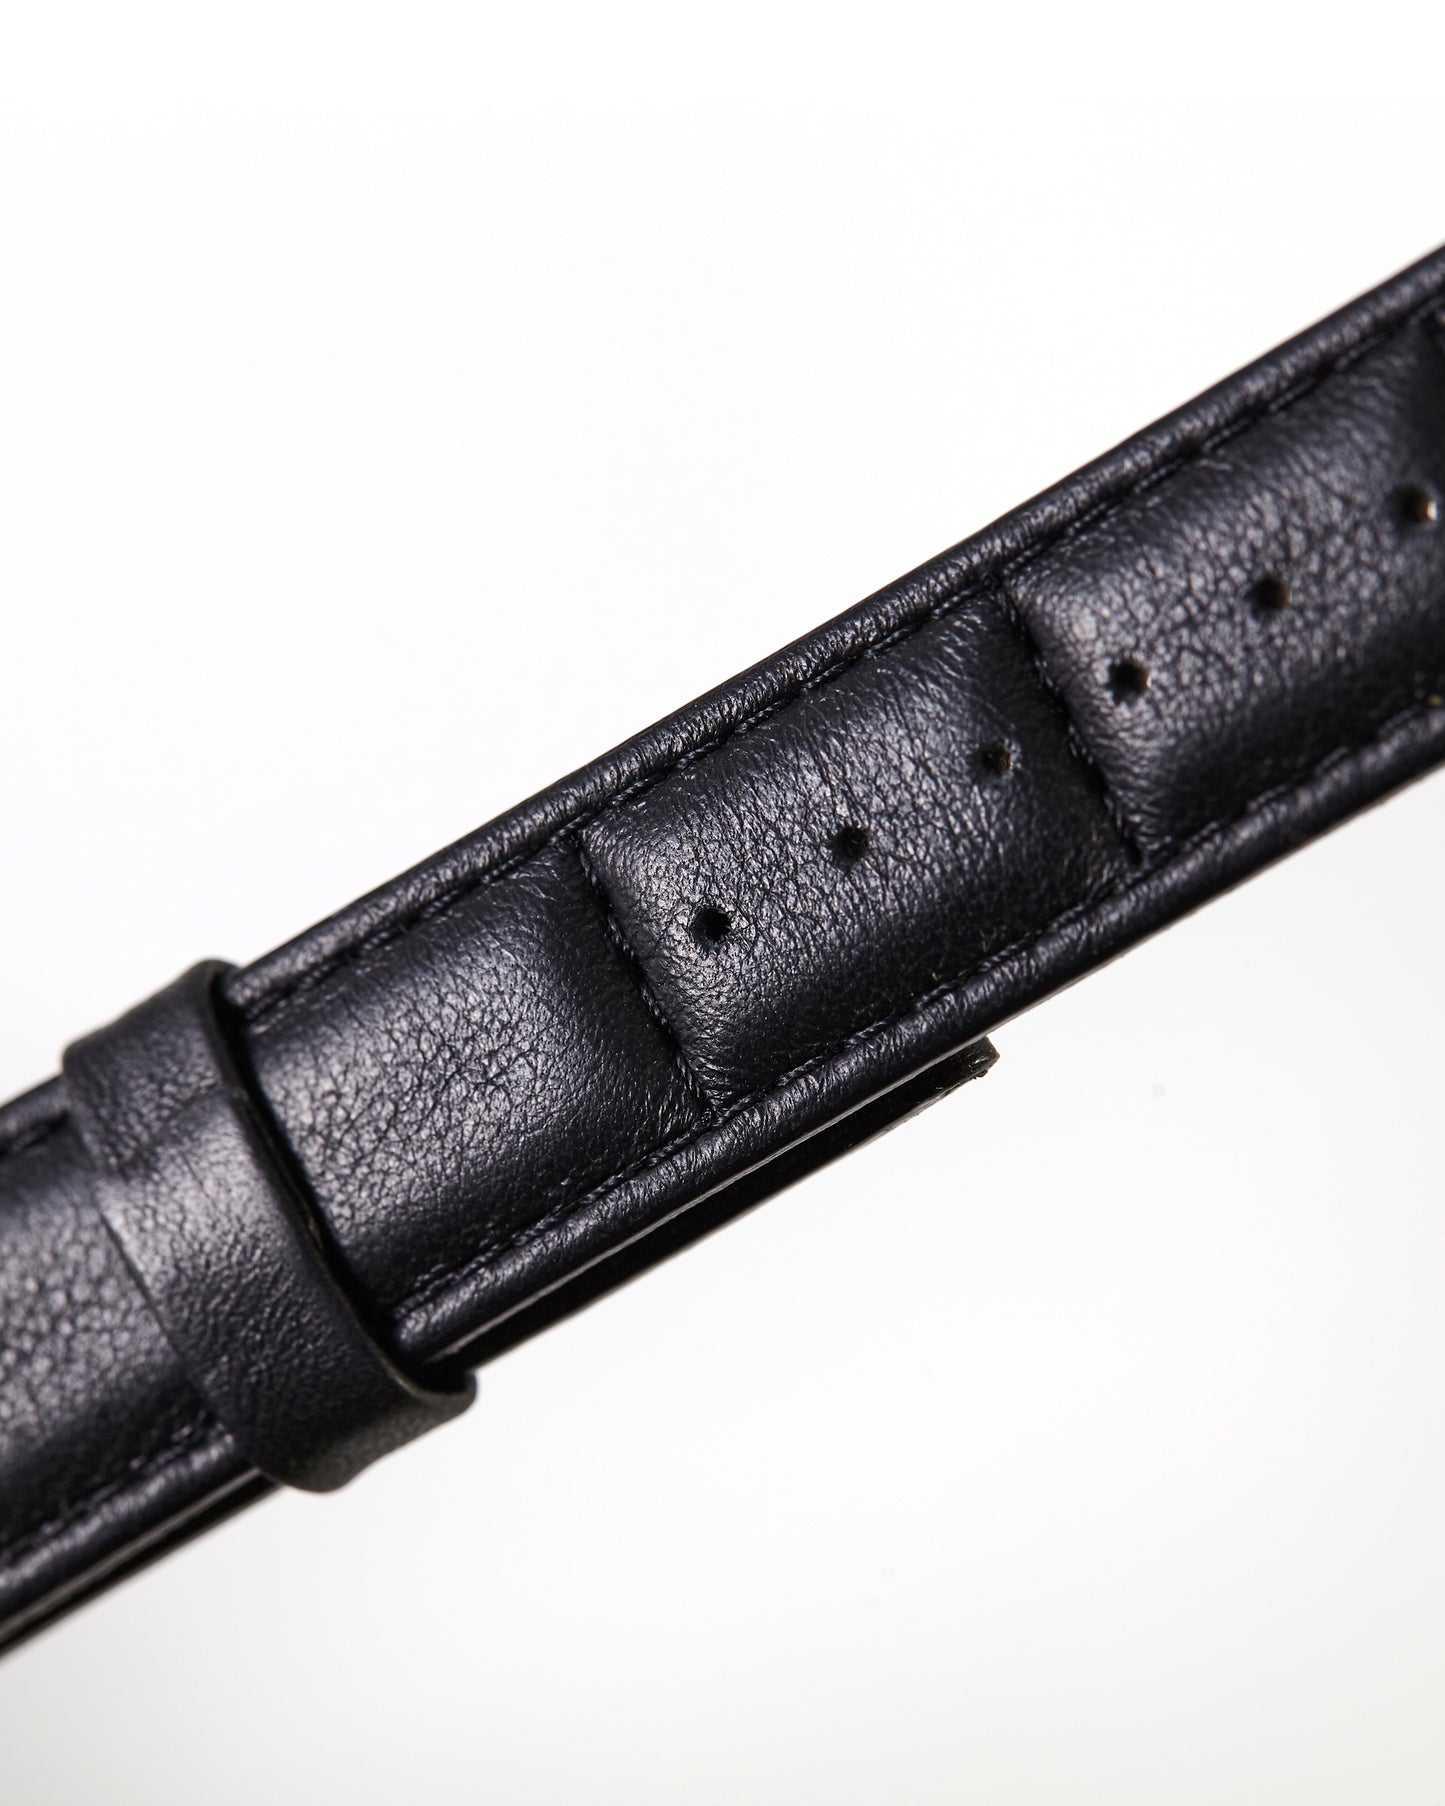 Ecclissi 75385 Black Leather Strap 20mm x 18mm